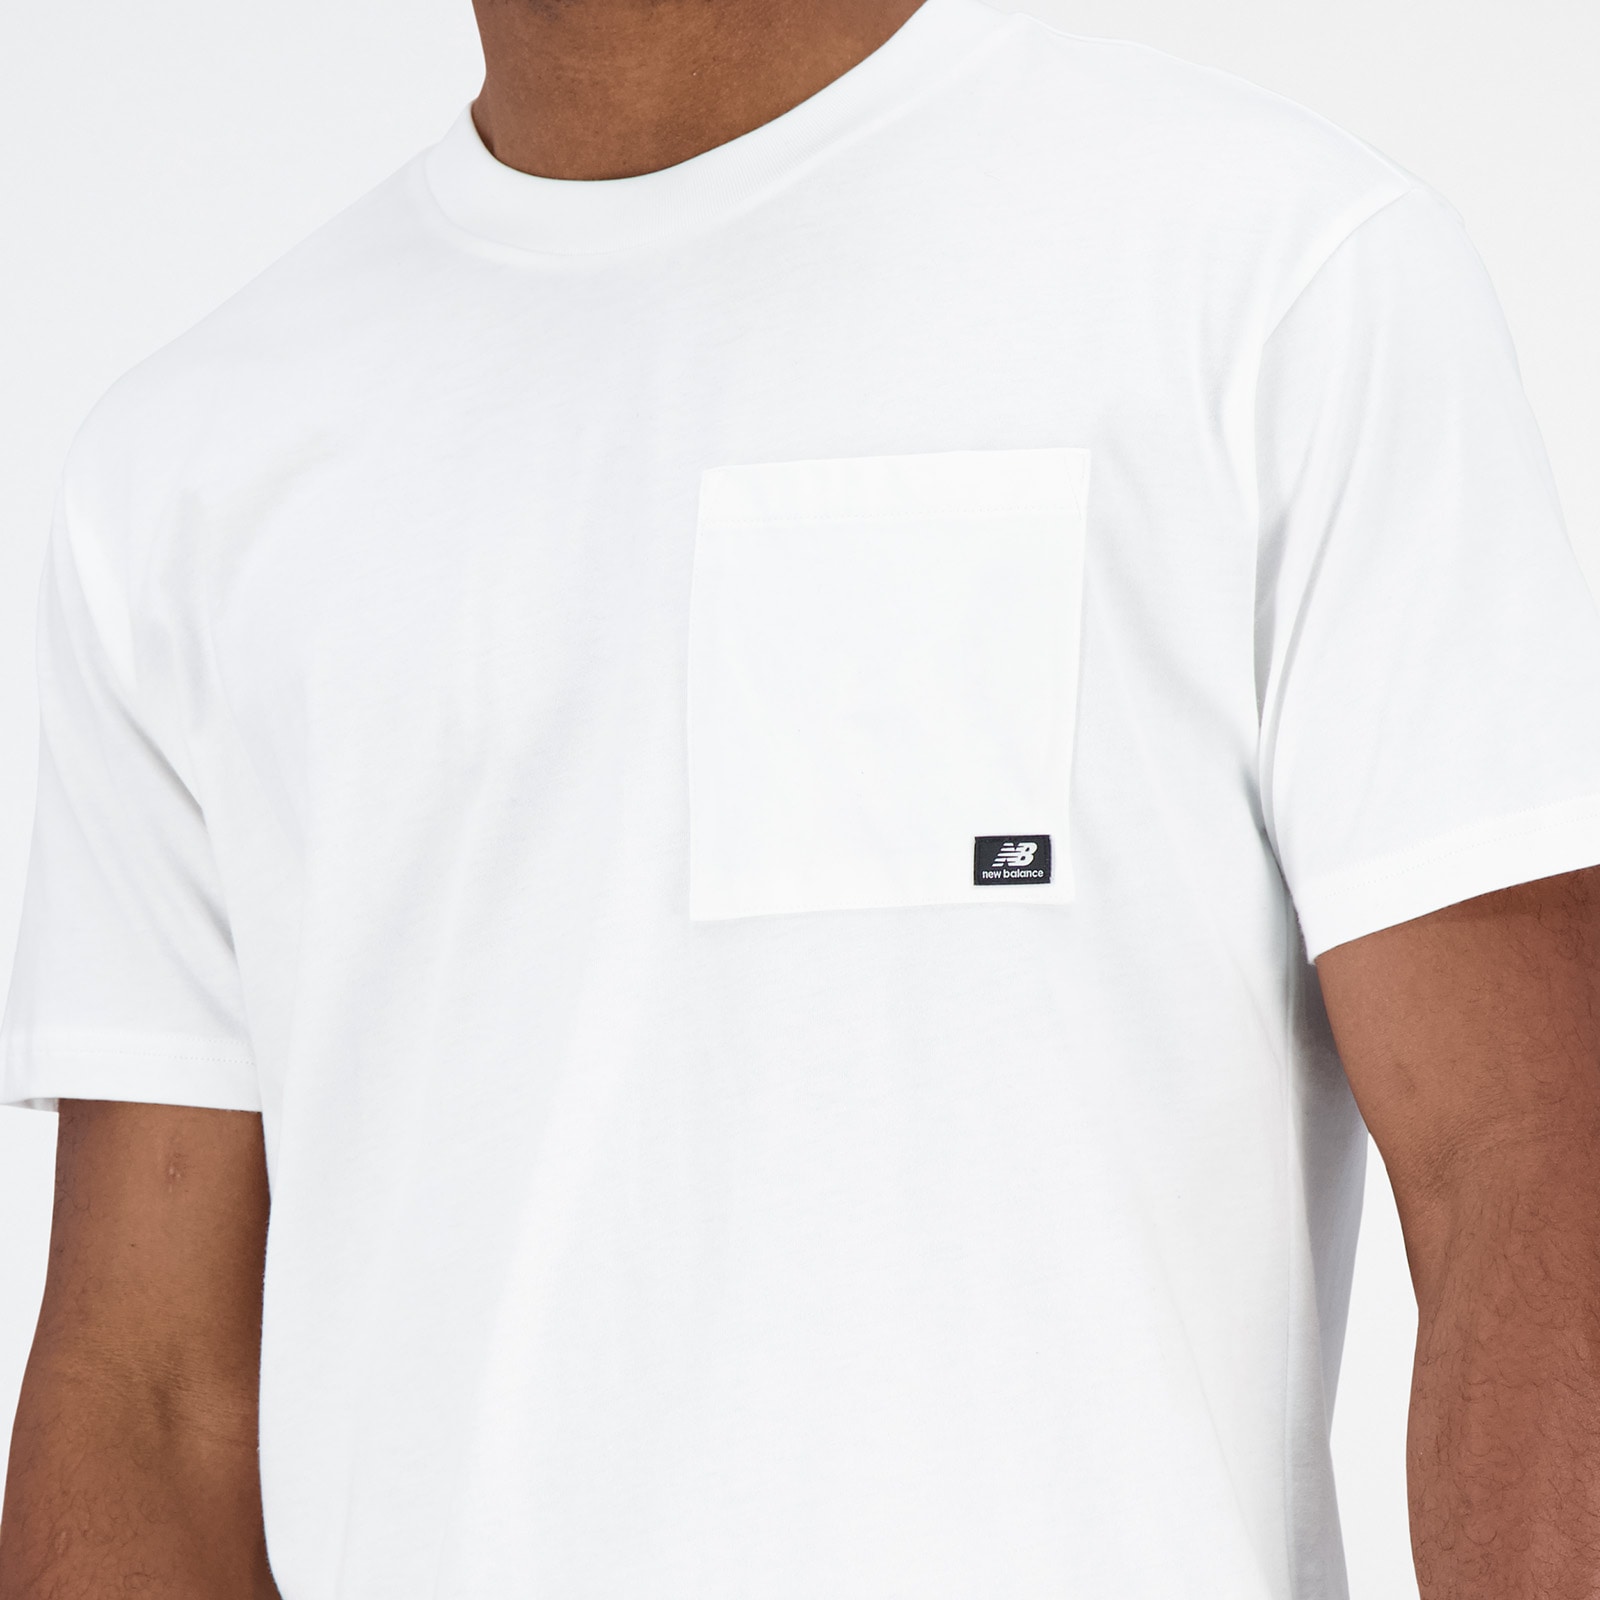 NB Essentials Pocket Short Sleeve T-Shirt